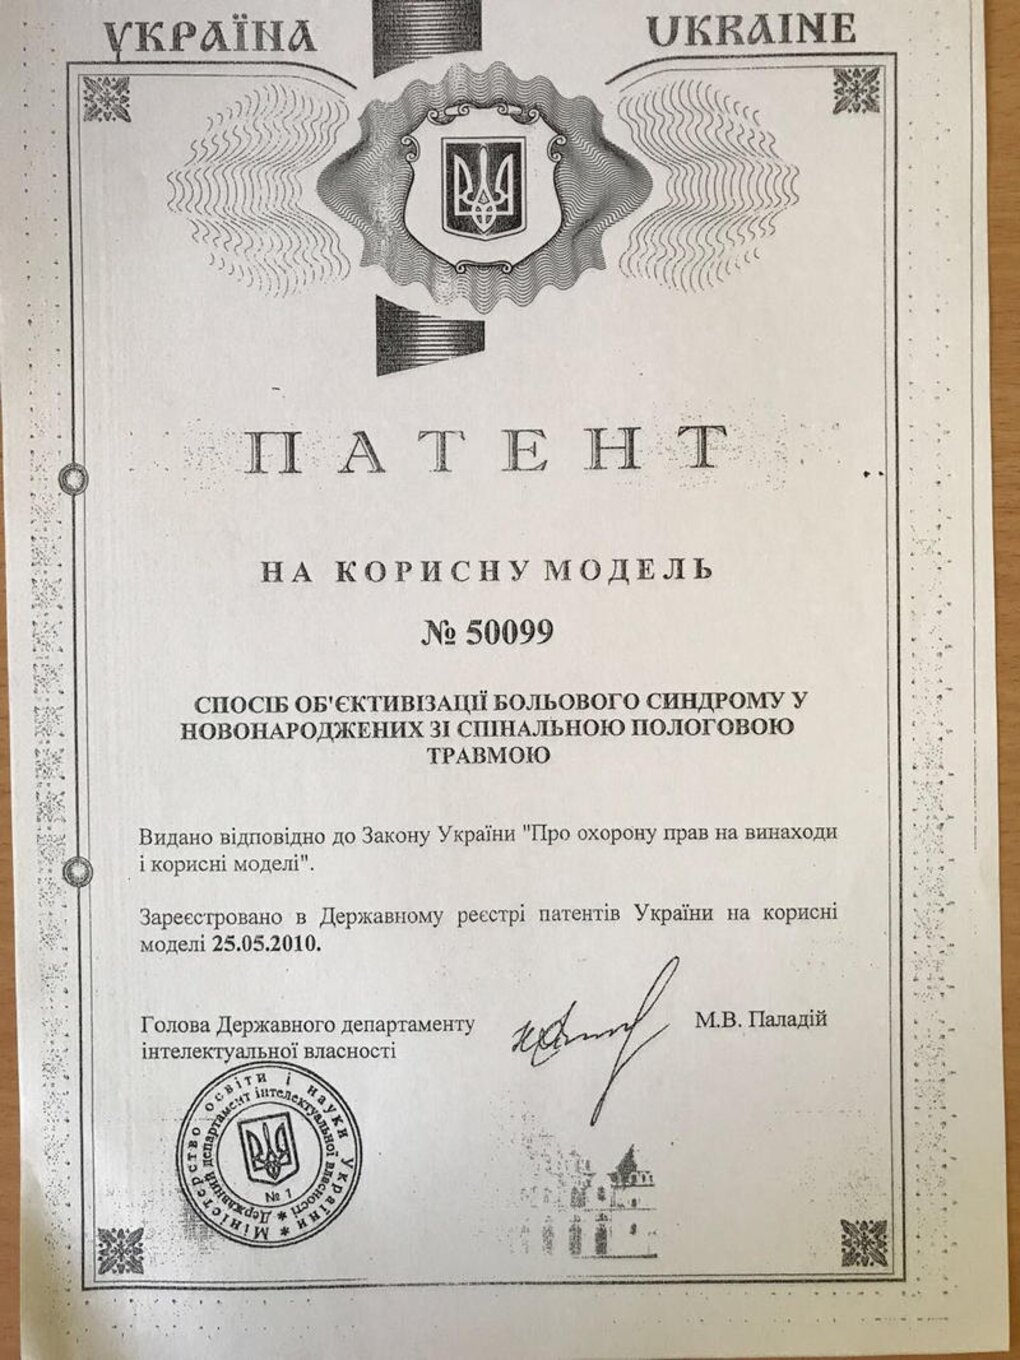 certificates/grigoruk-maksim-antonovich/hemomedika-cert-grigoruk-13.jpg